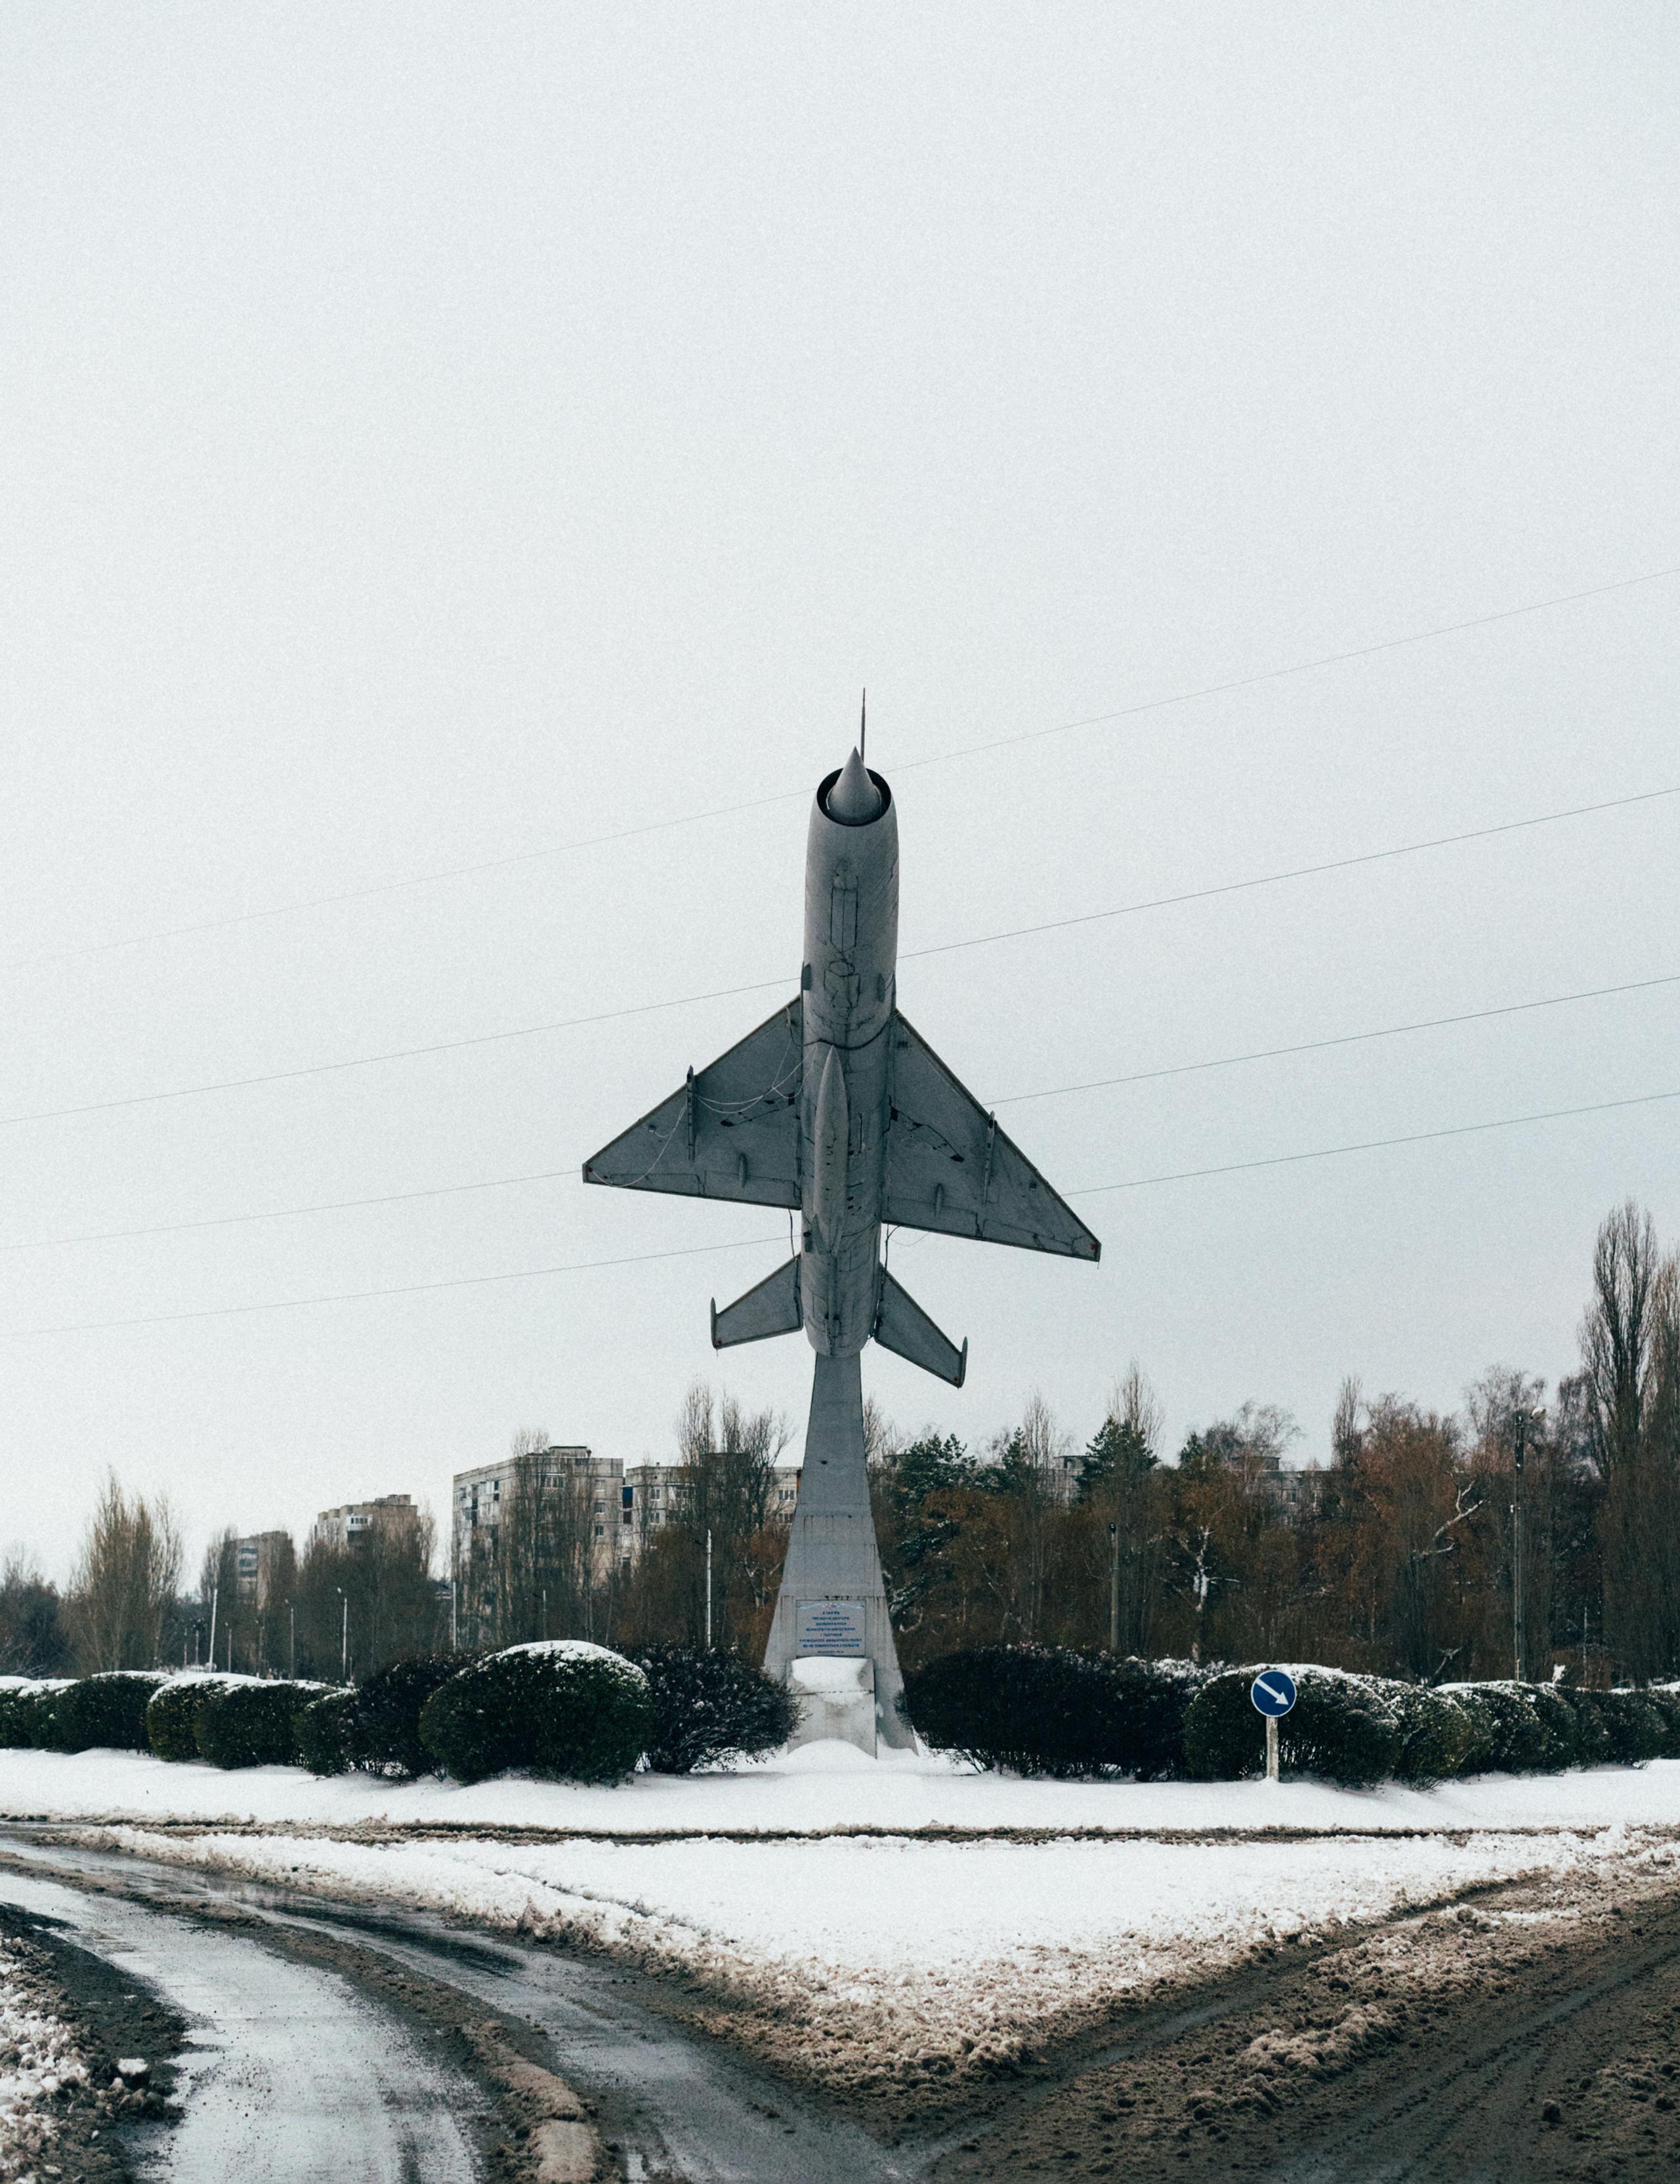 Soviet-era sculpture of rocket on street in Ukraine